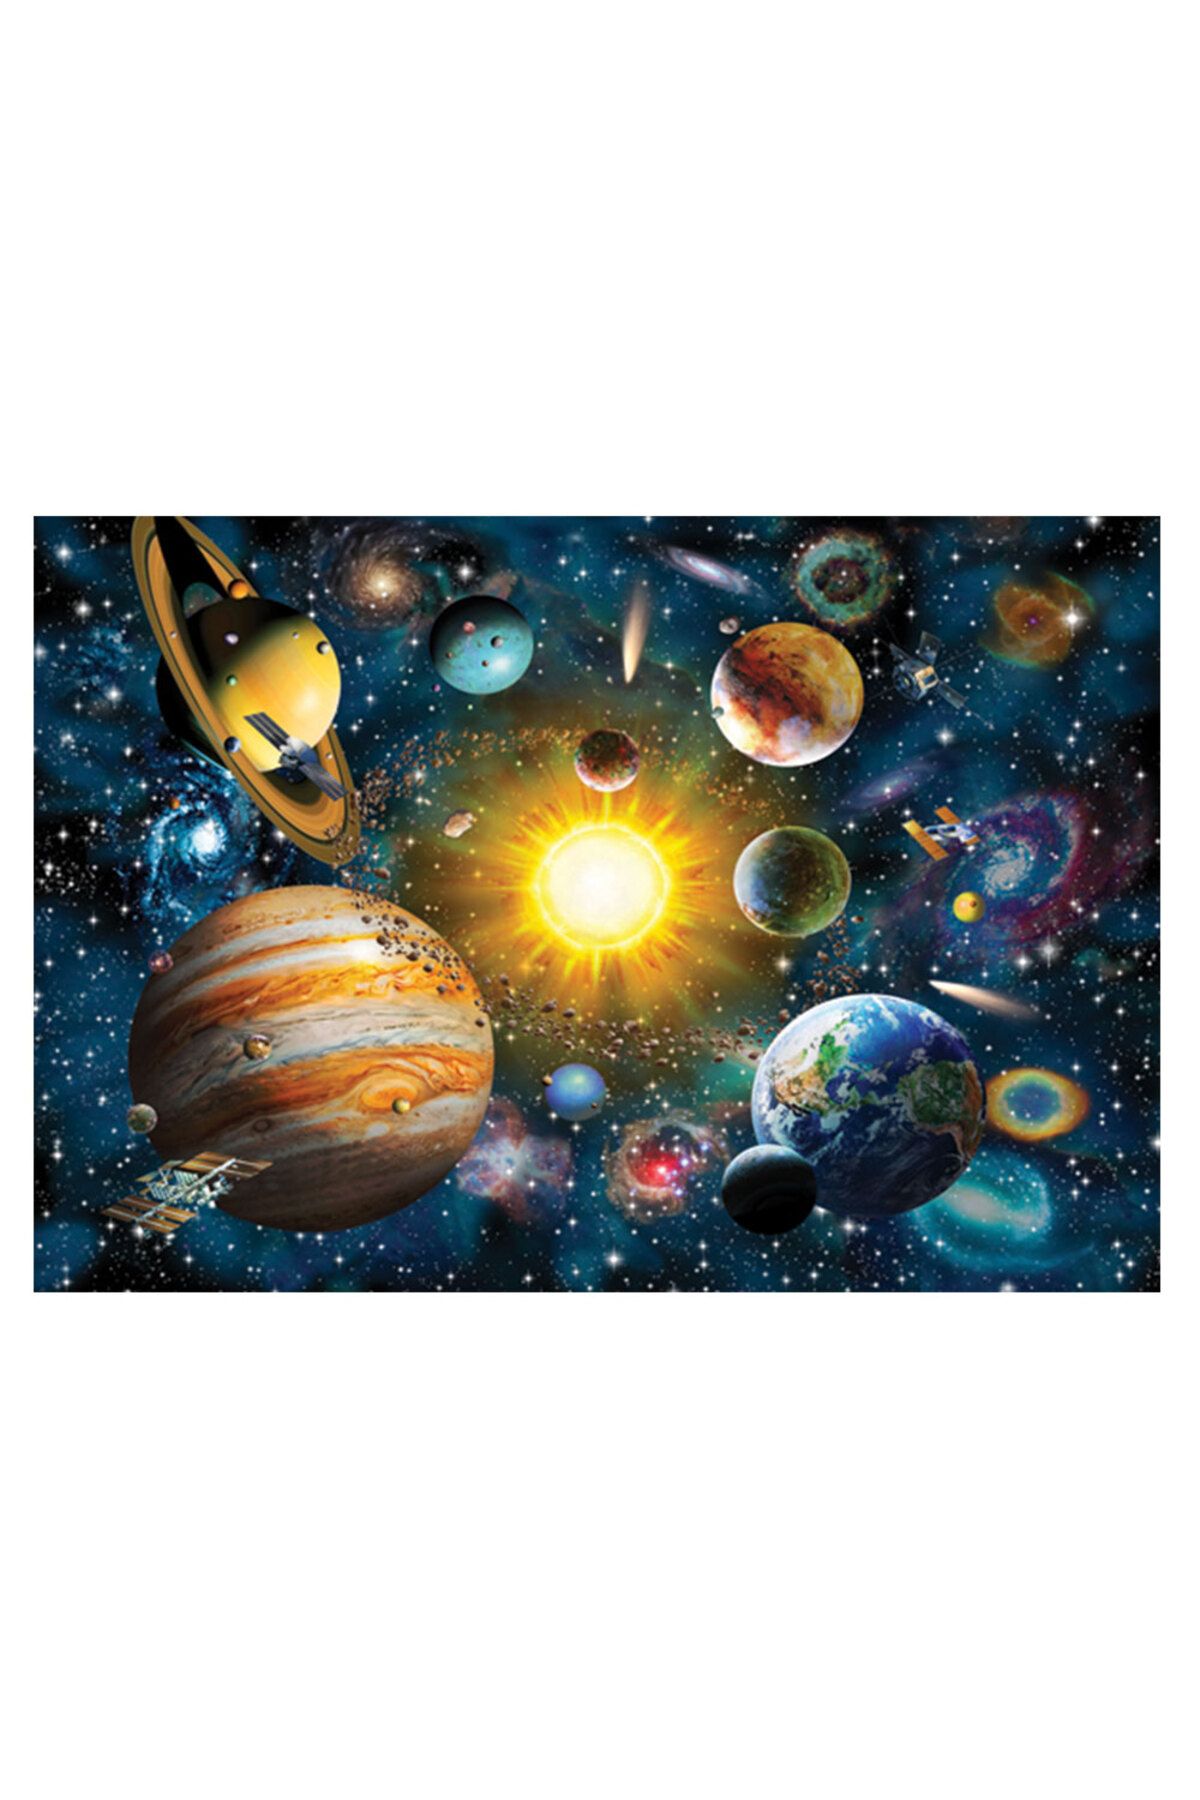 Anatolian Puzzle - Solar System, 2000 Piece Jigsaw Puzzle, Code: 3946,  Multicolor